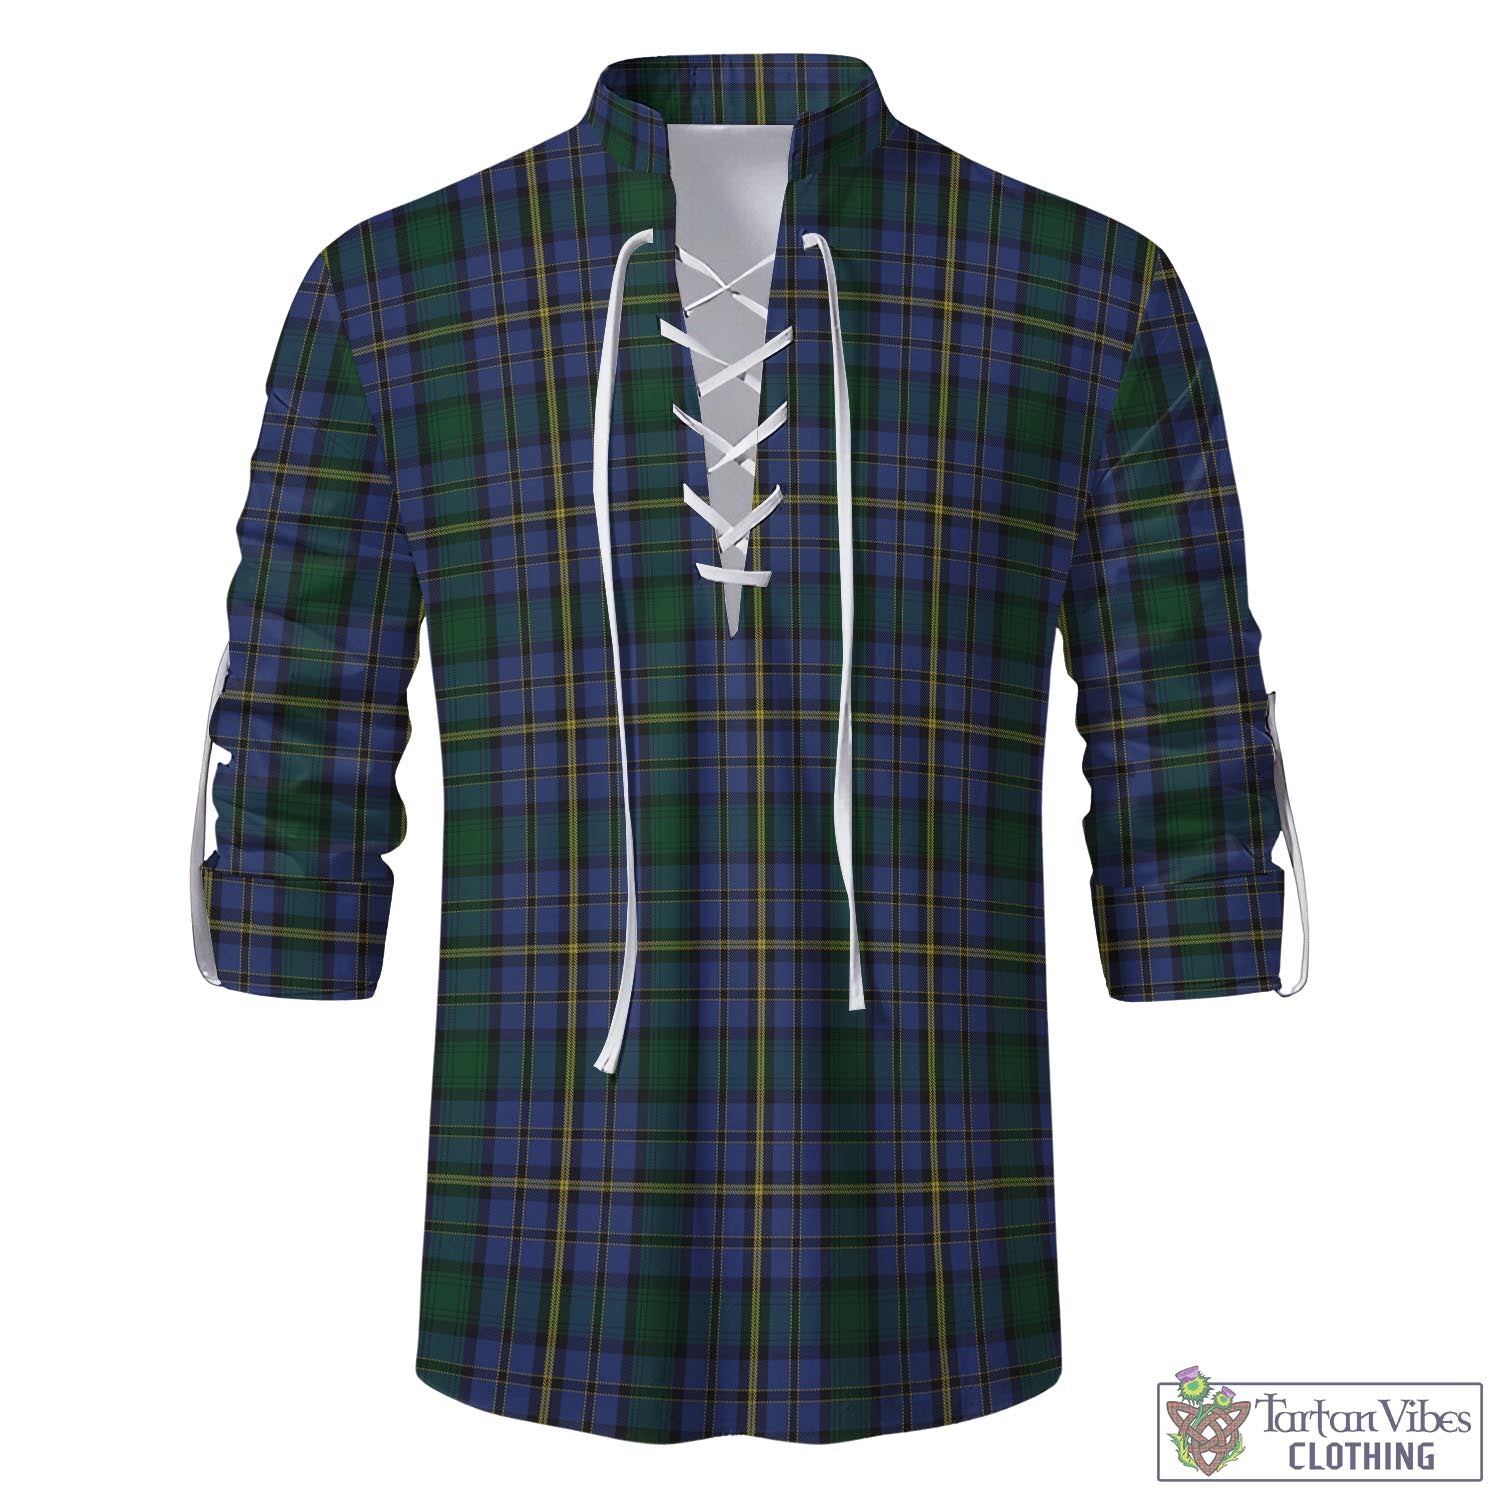 Tartan Vibes Clothing Hope Clan Originaux Tartan Men's Scottish Traditional Jacobite Ghillie Kilt Shirt